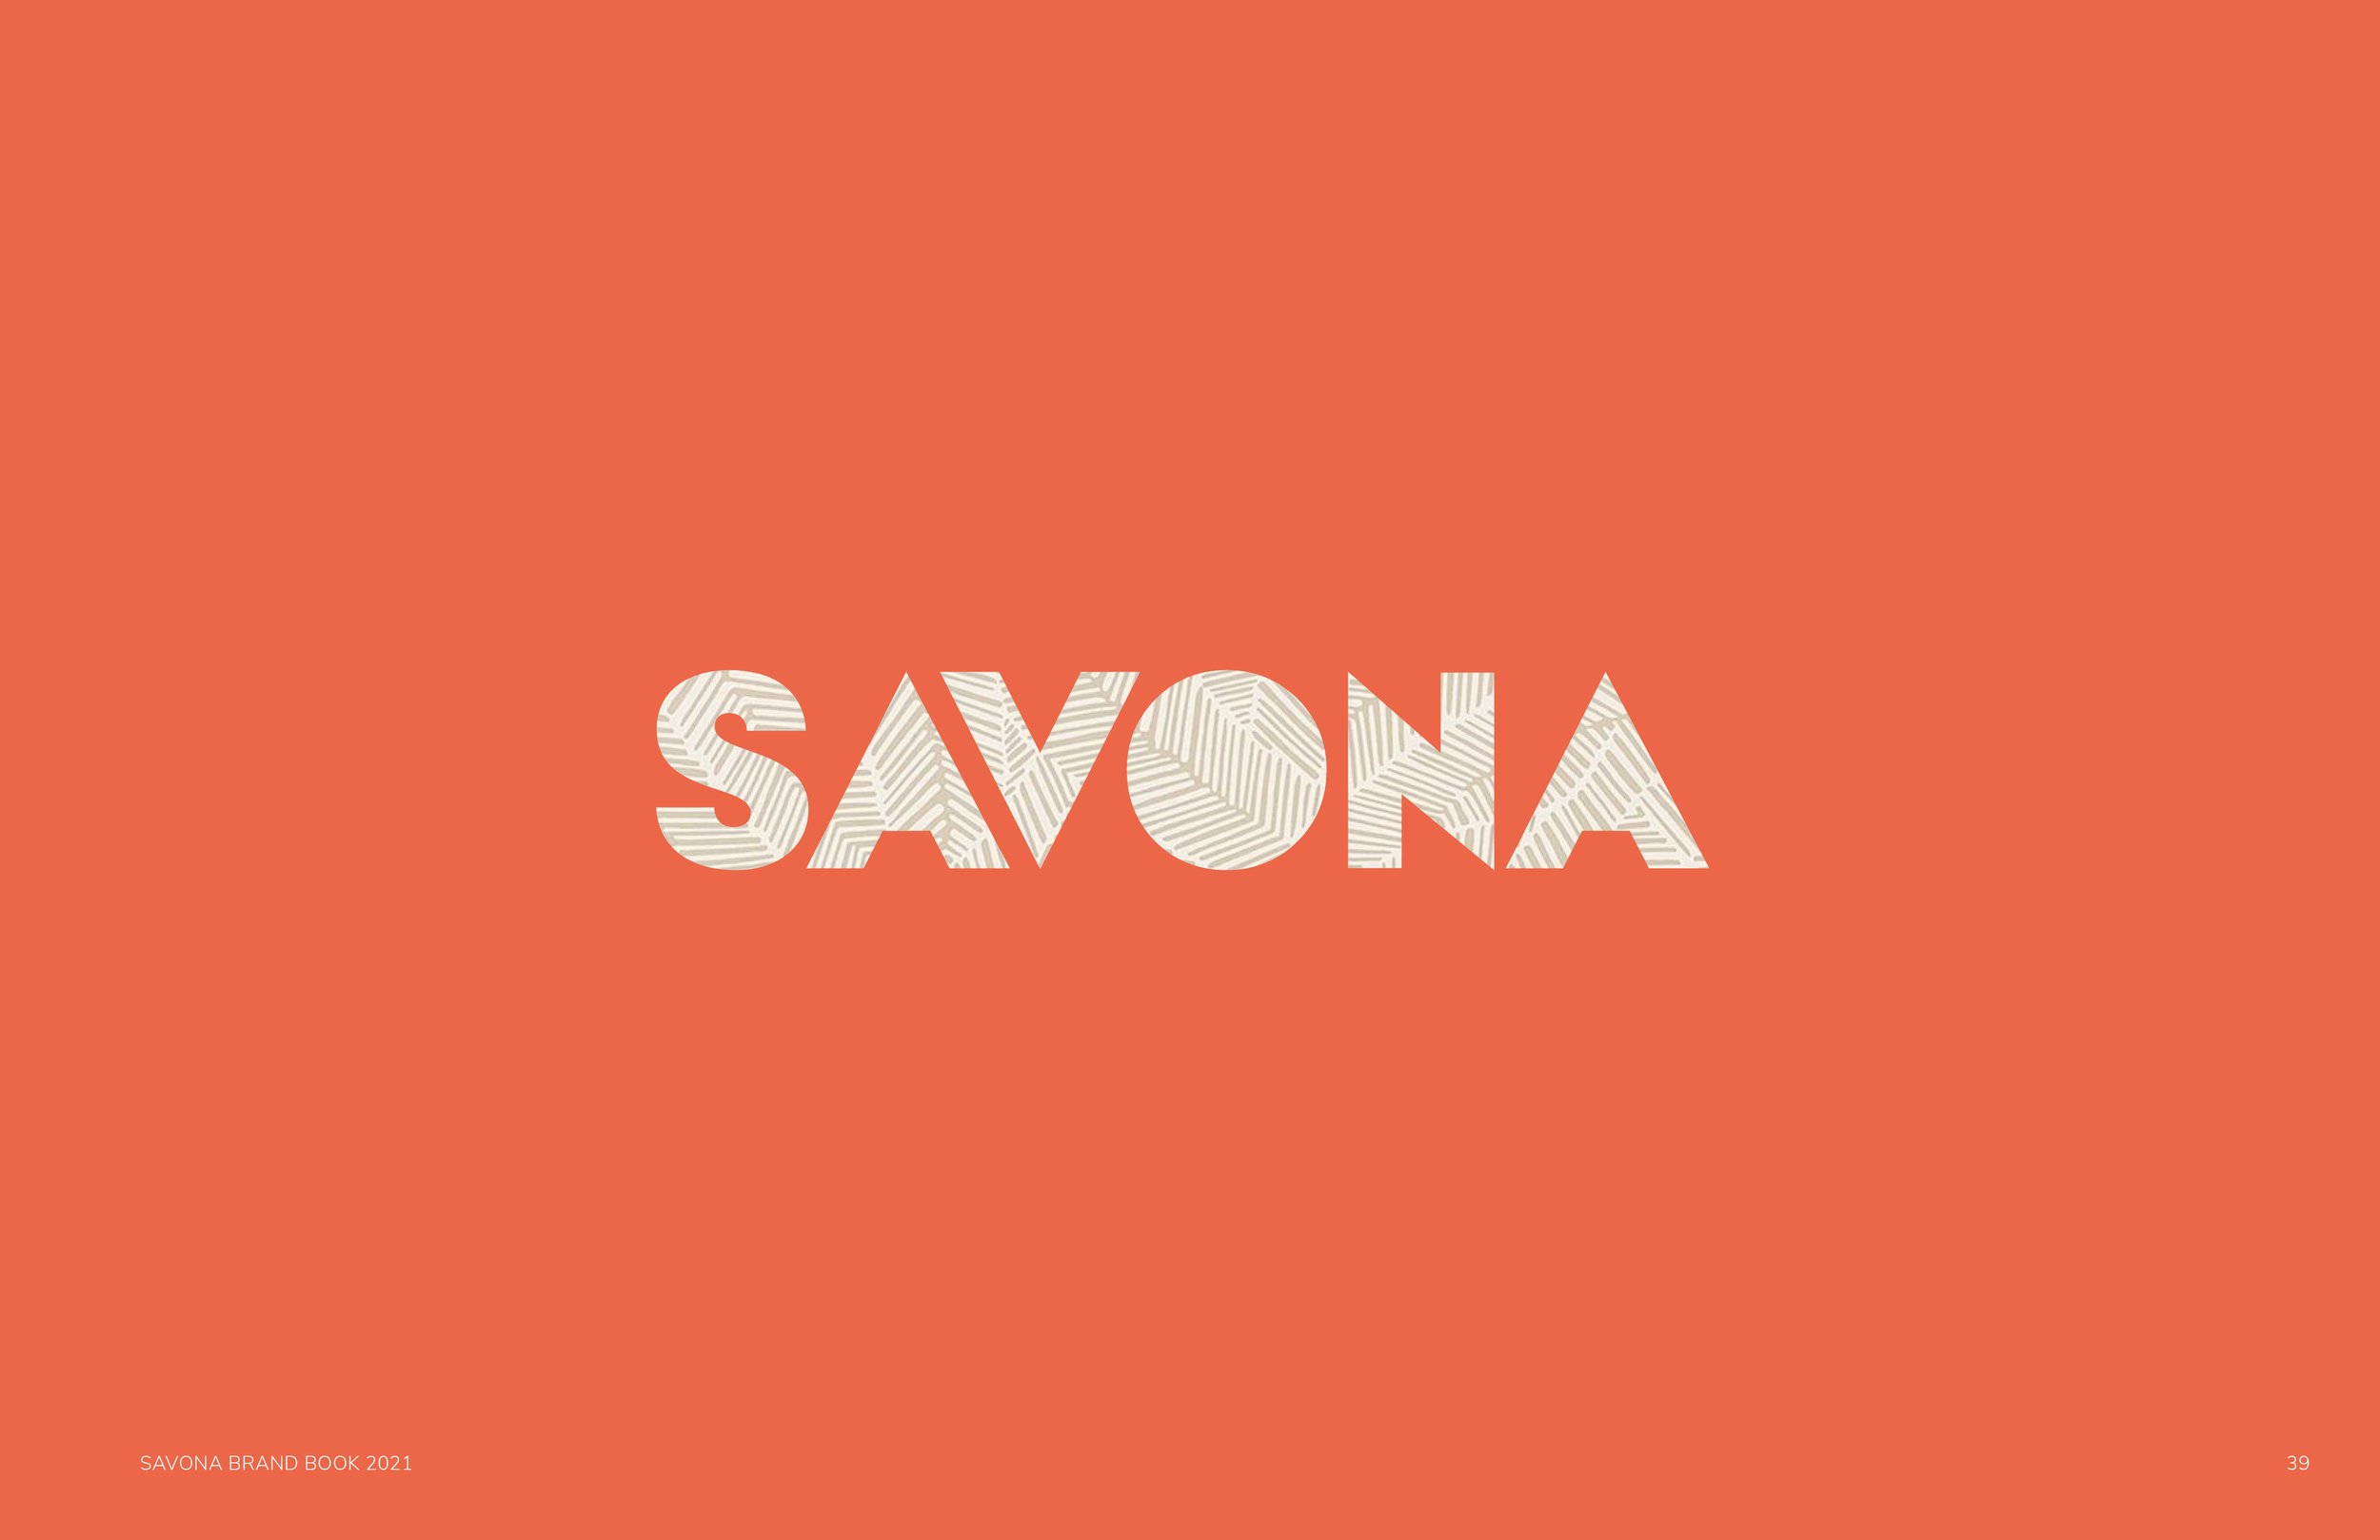 SAVONA_Brand_Book_2021_V539.jpg